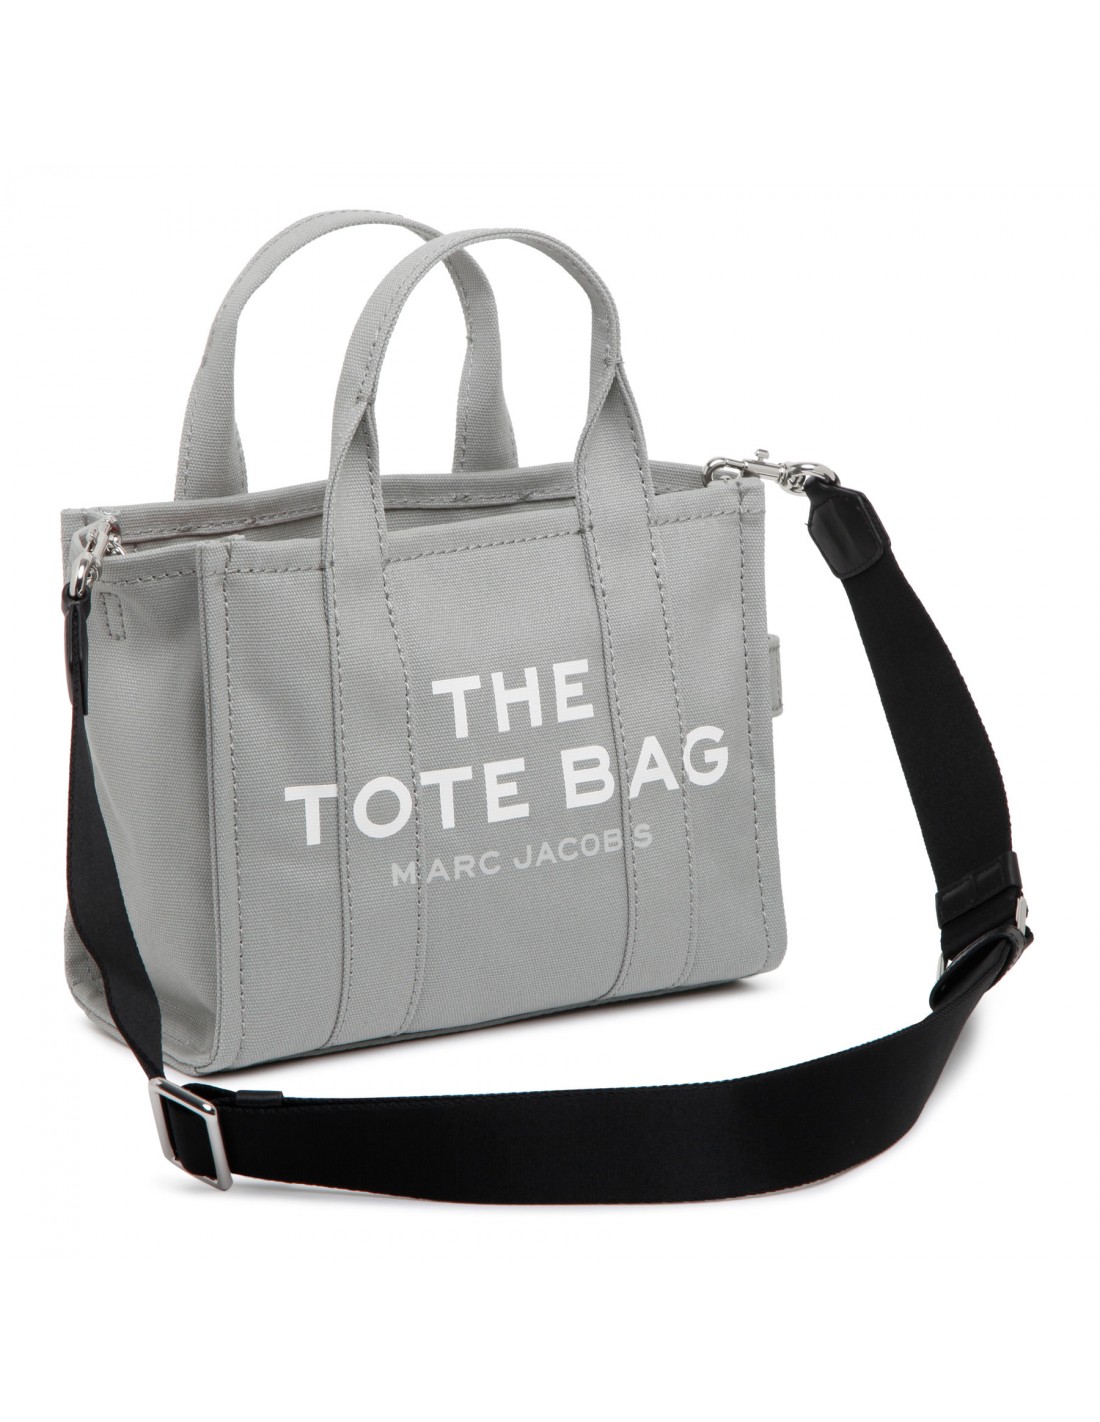 The mini tote bag